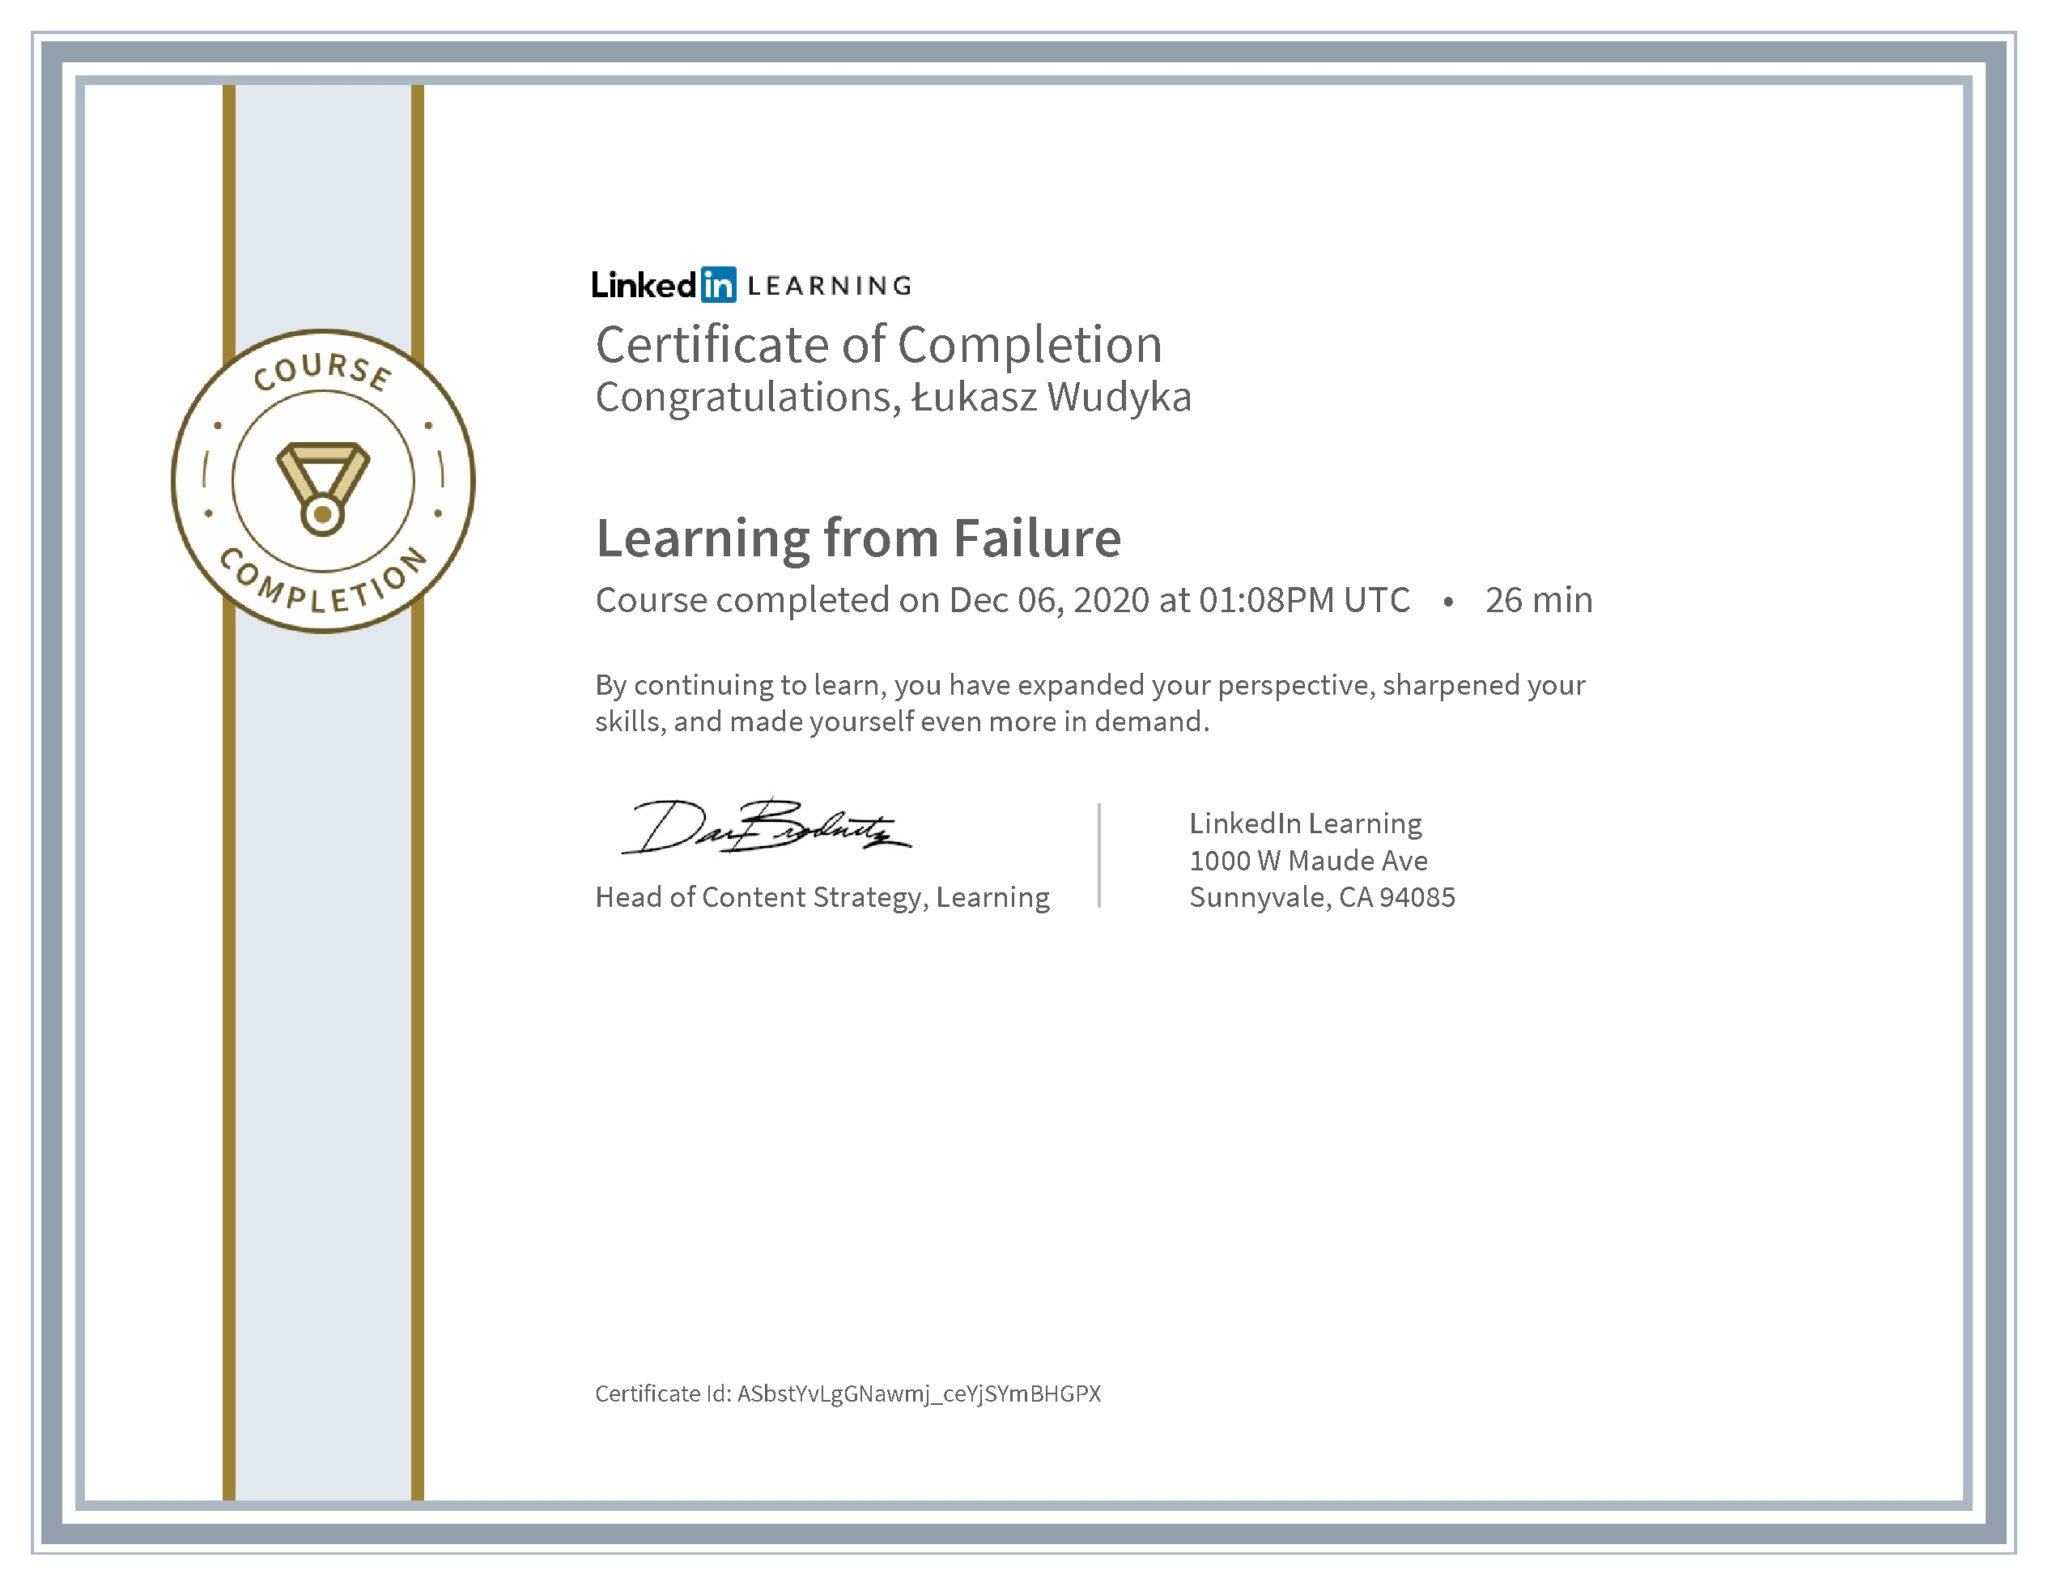 Łukasz Wudyka certyfikat LinkedIn Learning from Failure